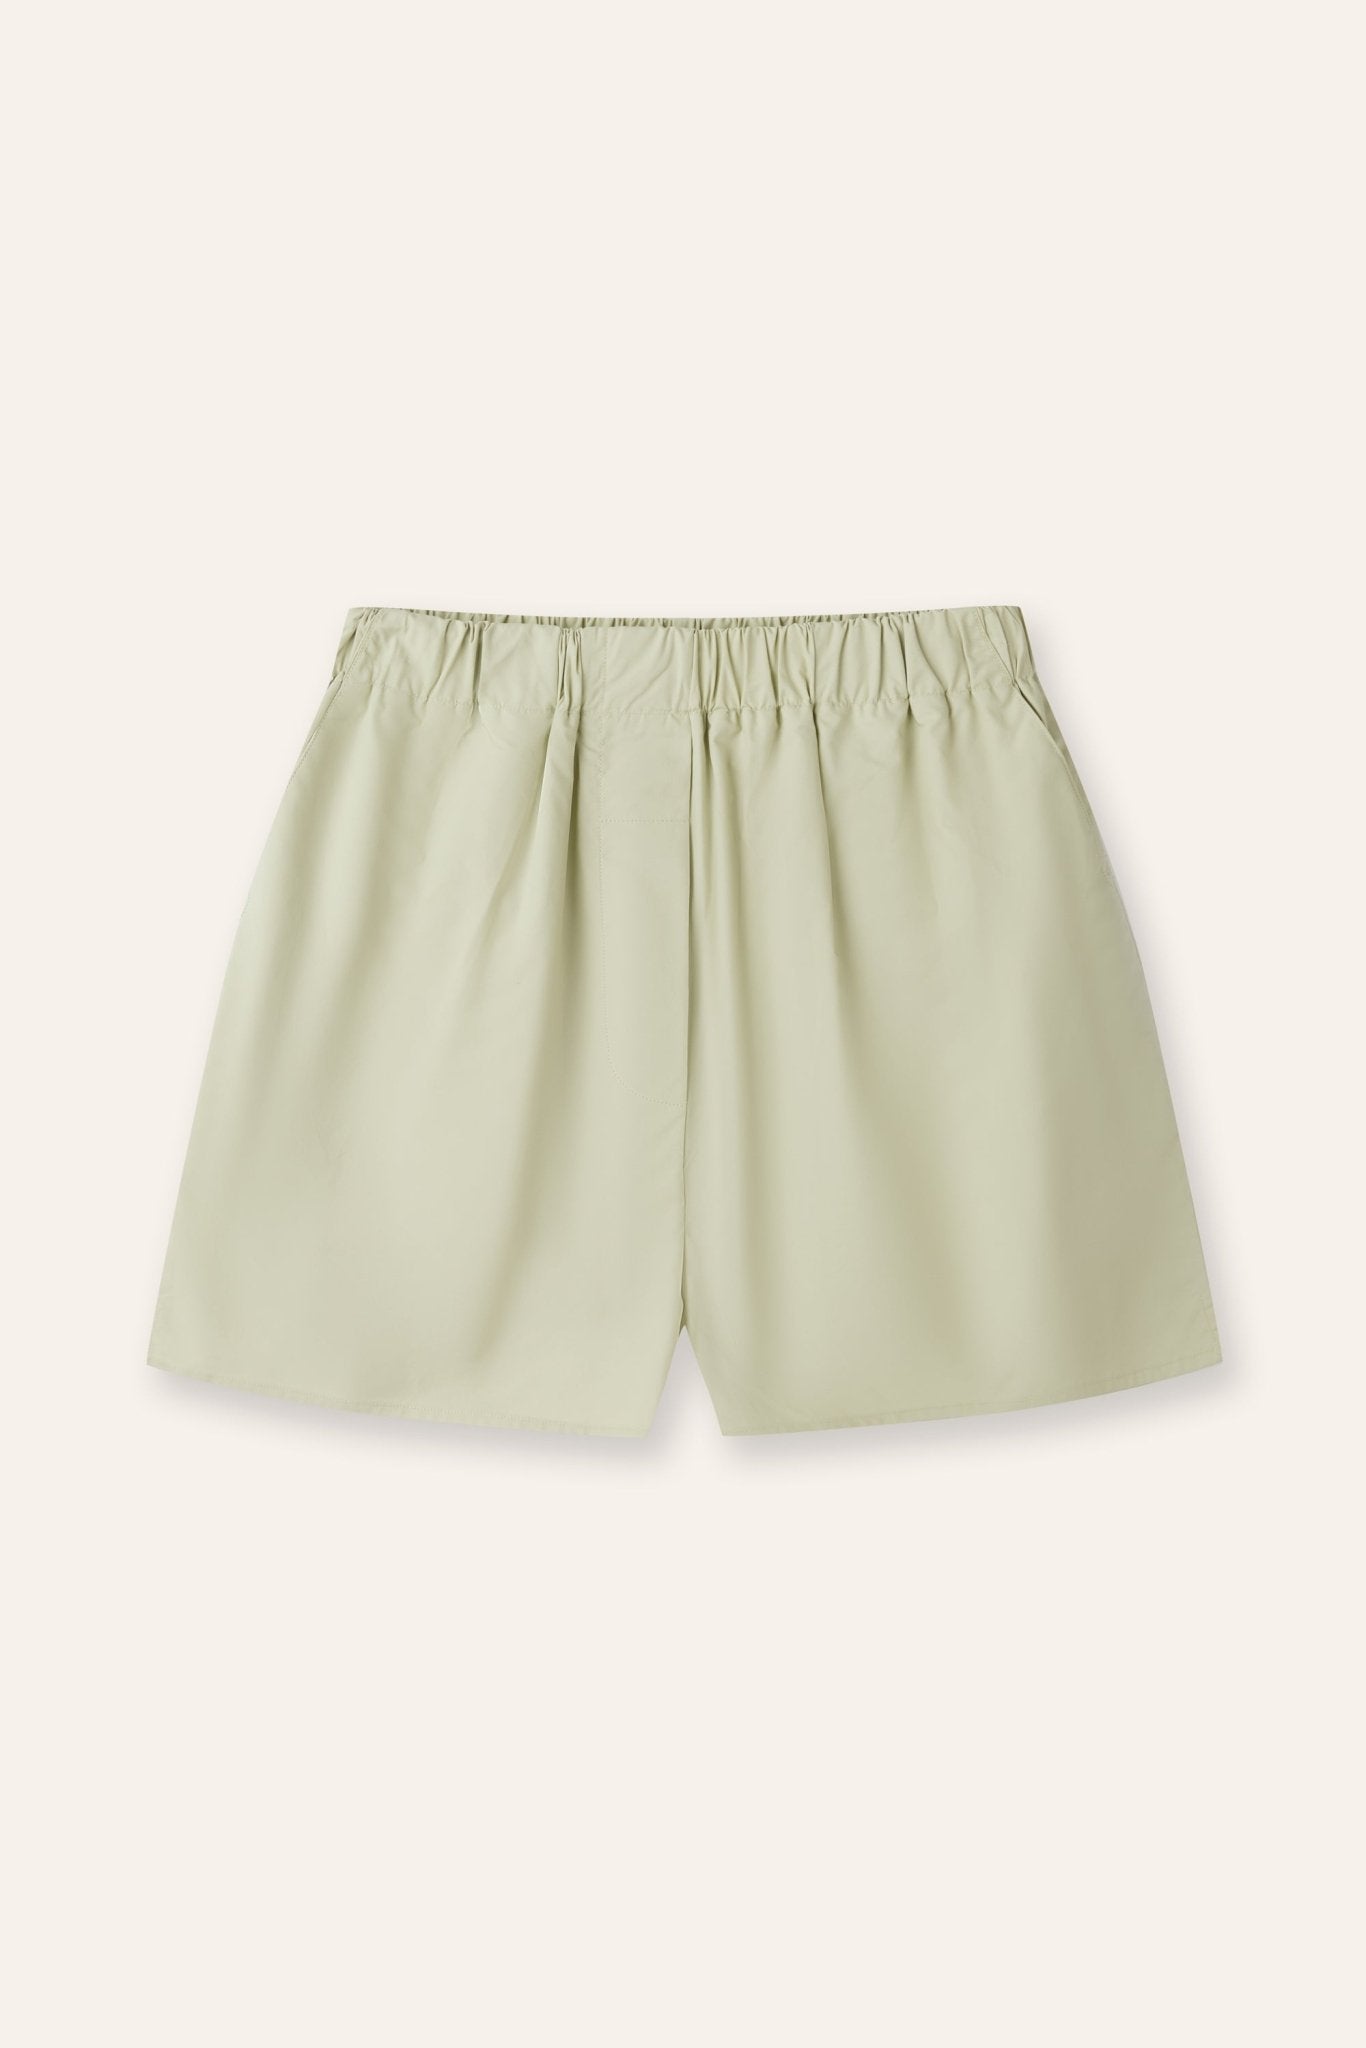 LUI cotton shorts (Sage) - STELLAM